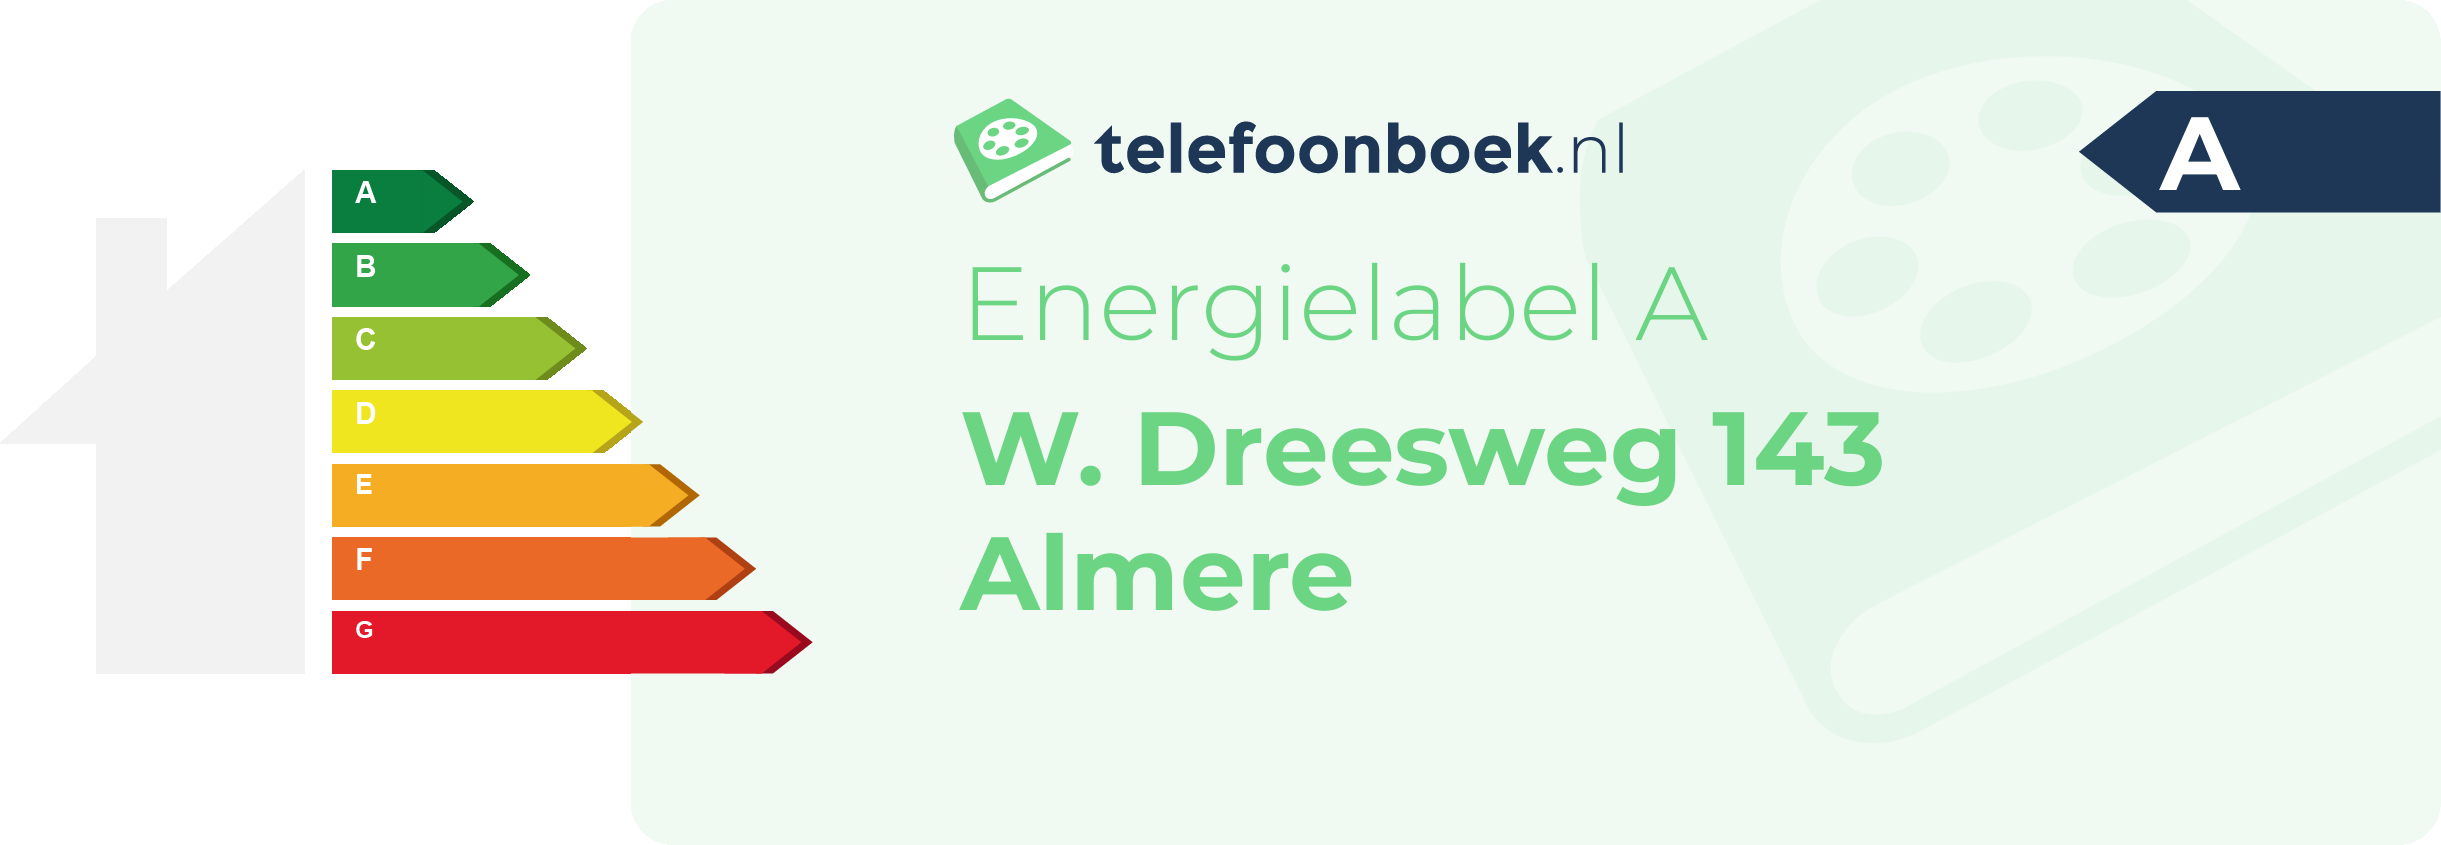 Energielabel W. Dreesweg 143 Almere